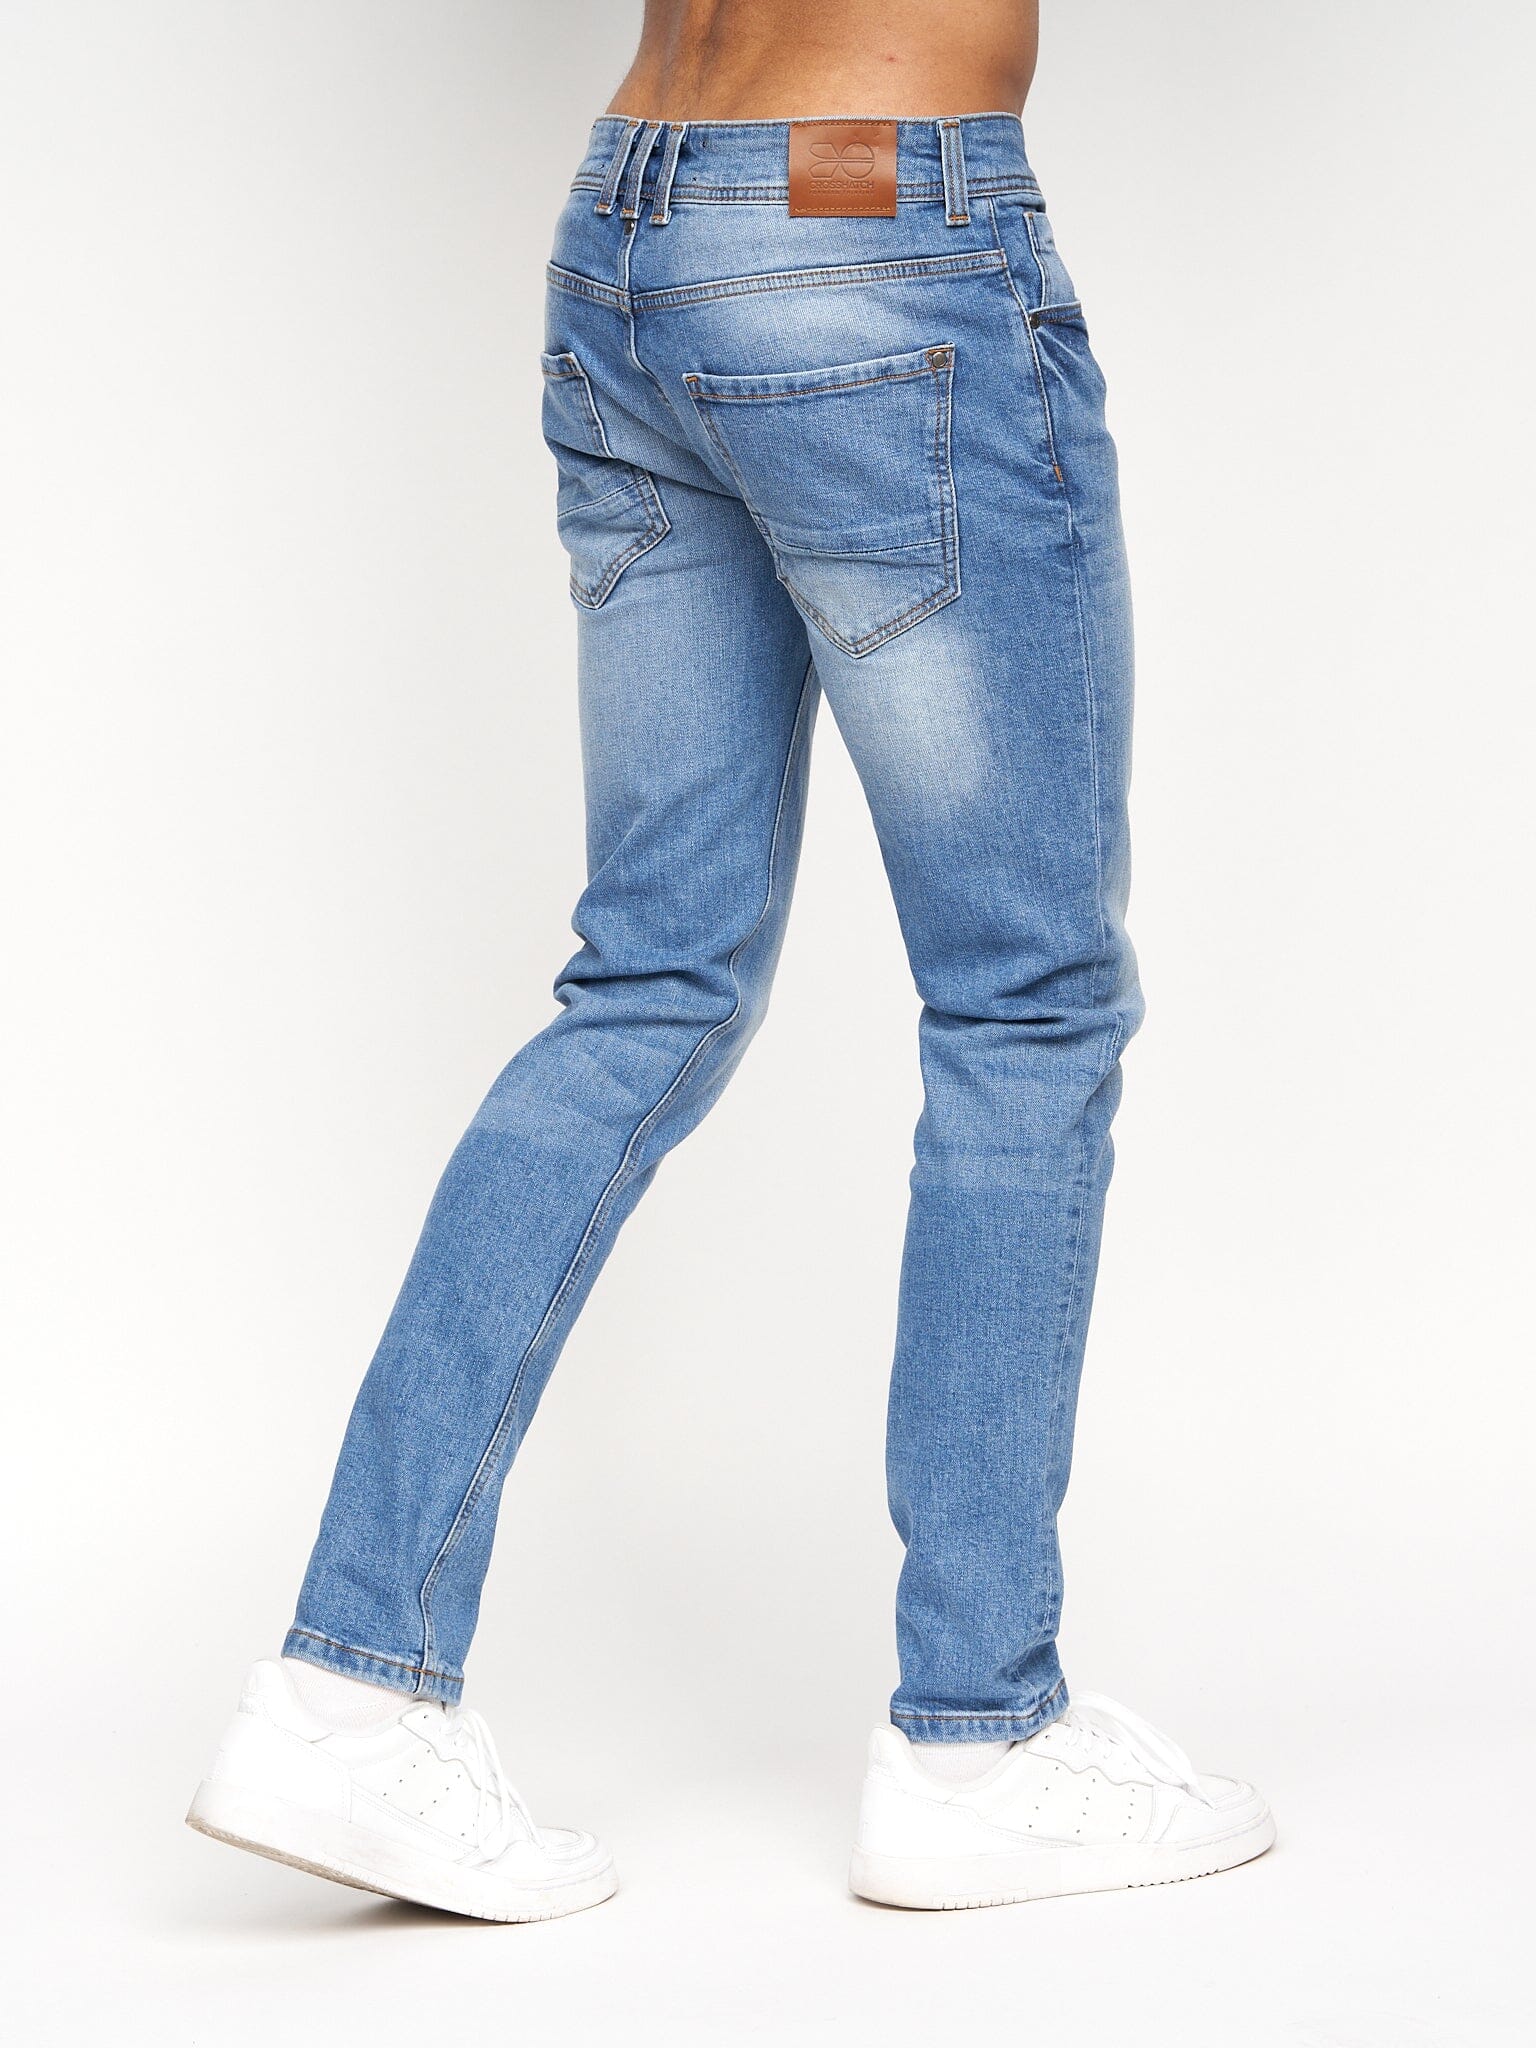 Crosshatch - Sheldons Slim Fit Jeans Light Wash